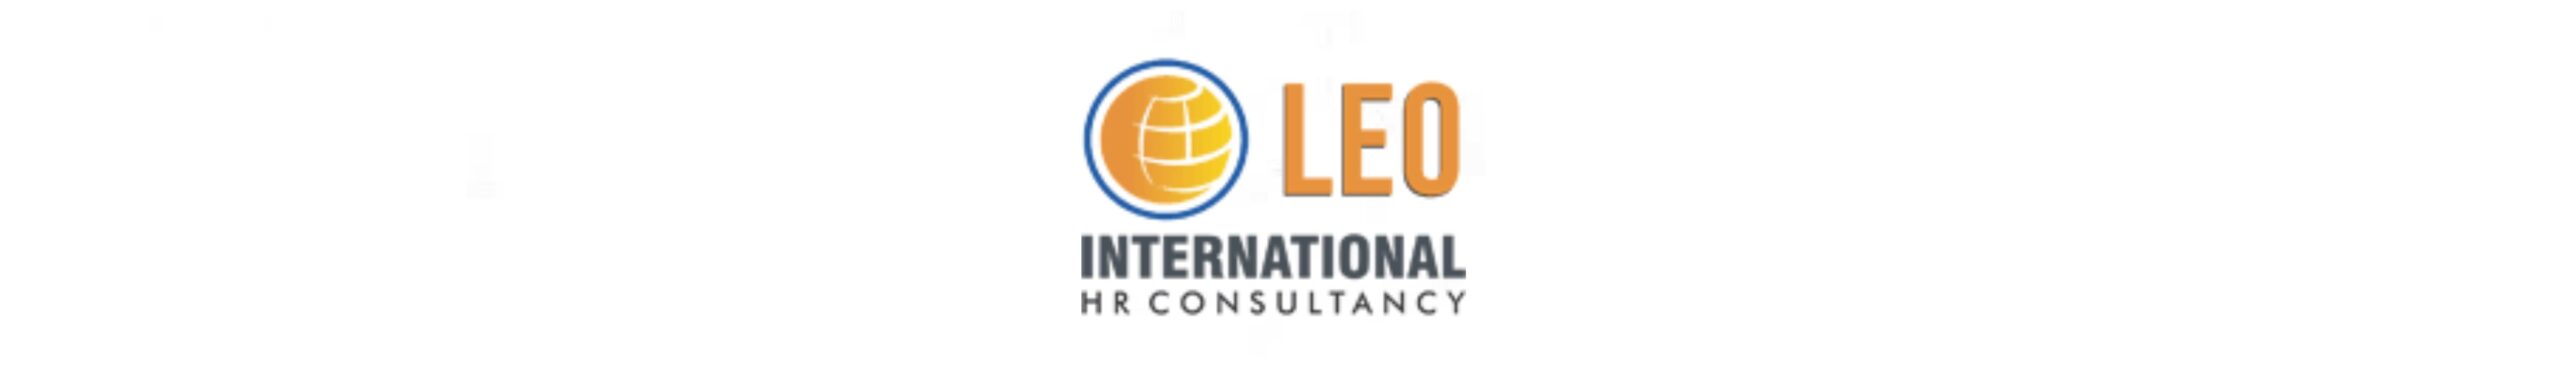 LEO International HR Consultancy